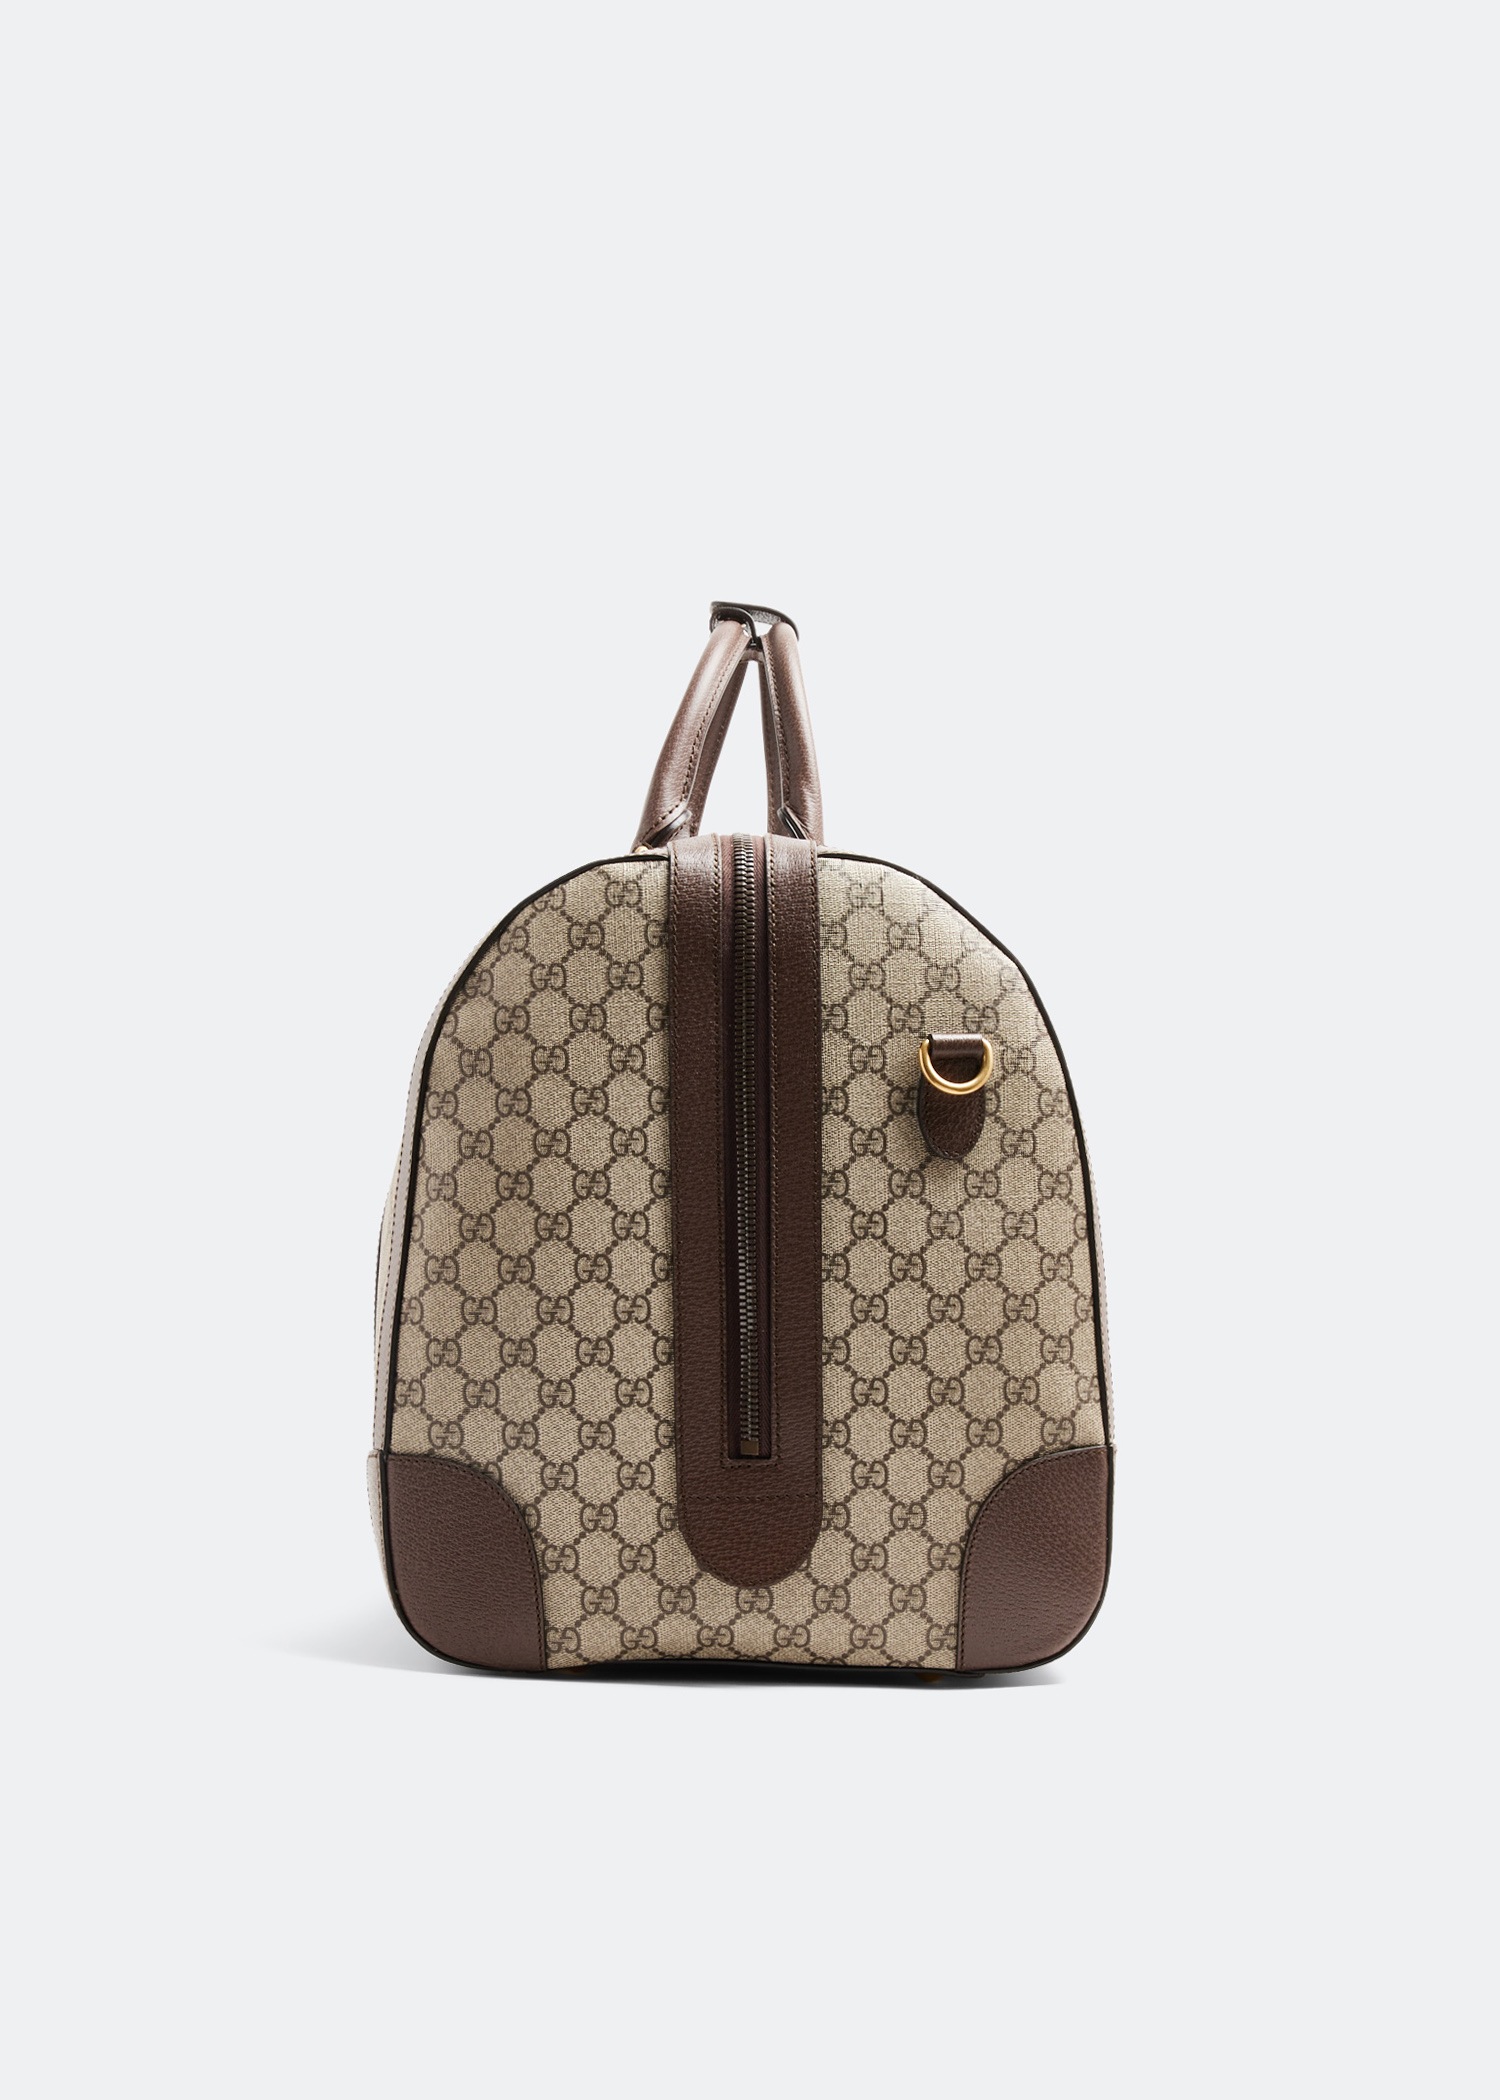 Gucci Savoy - Duffle bag for Man - Beige - 5479599C2ST-8746